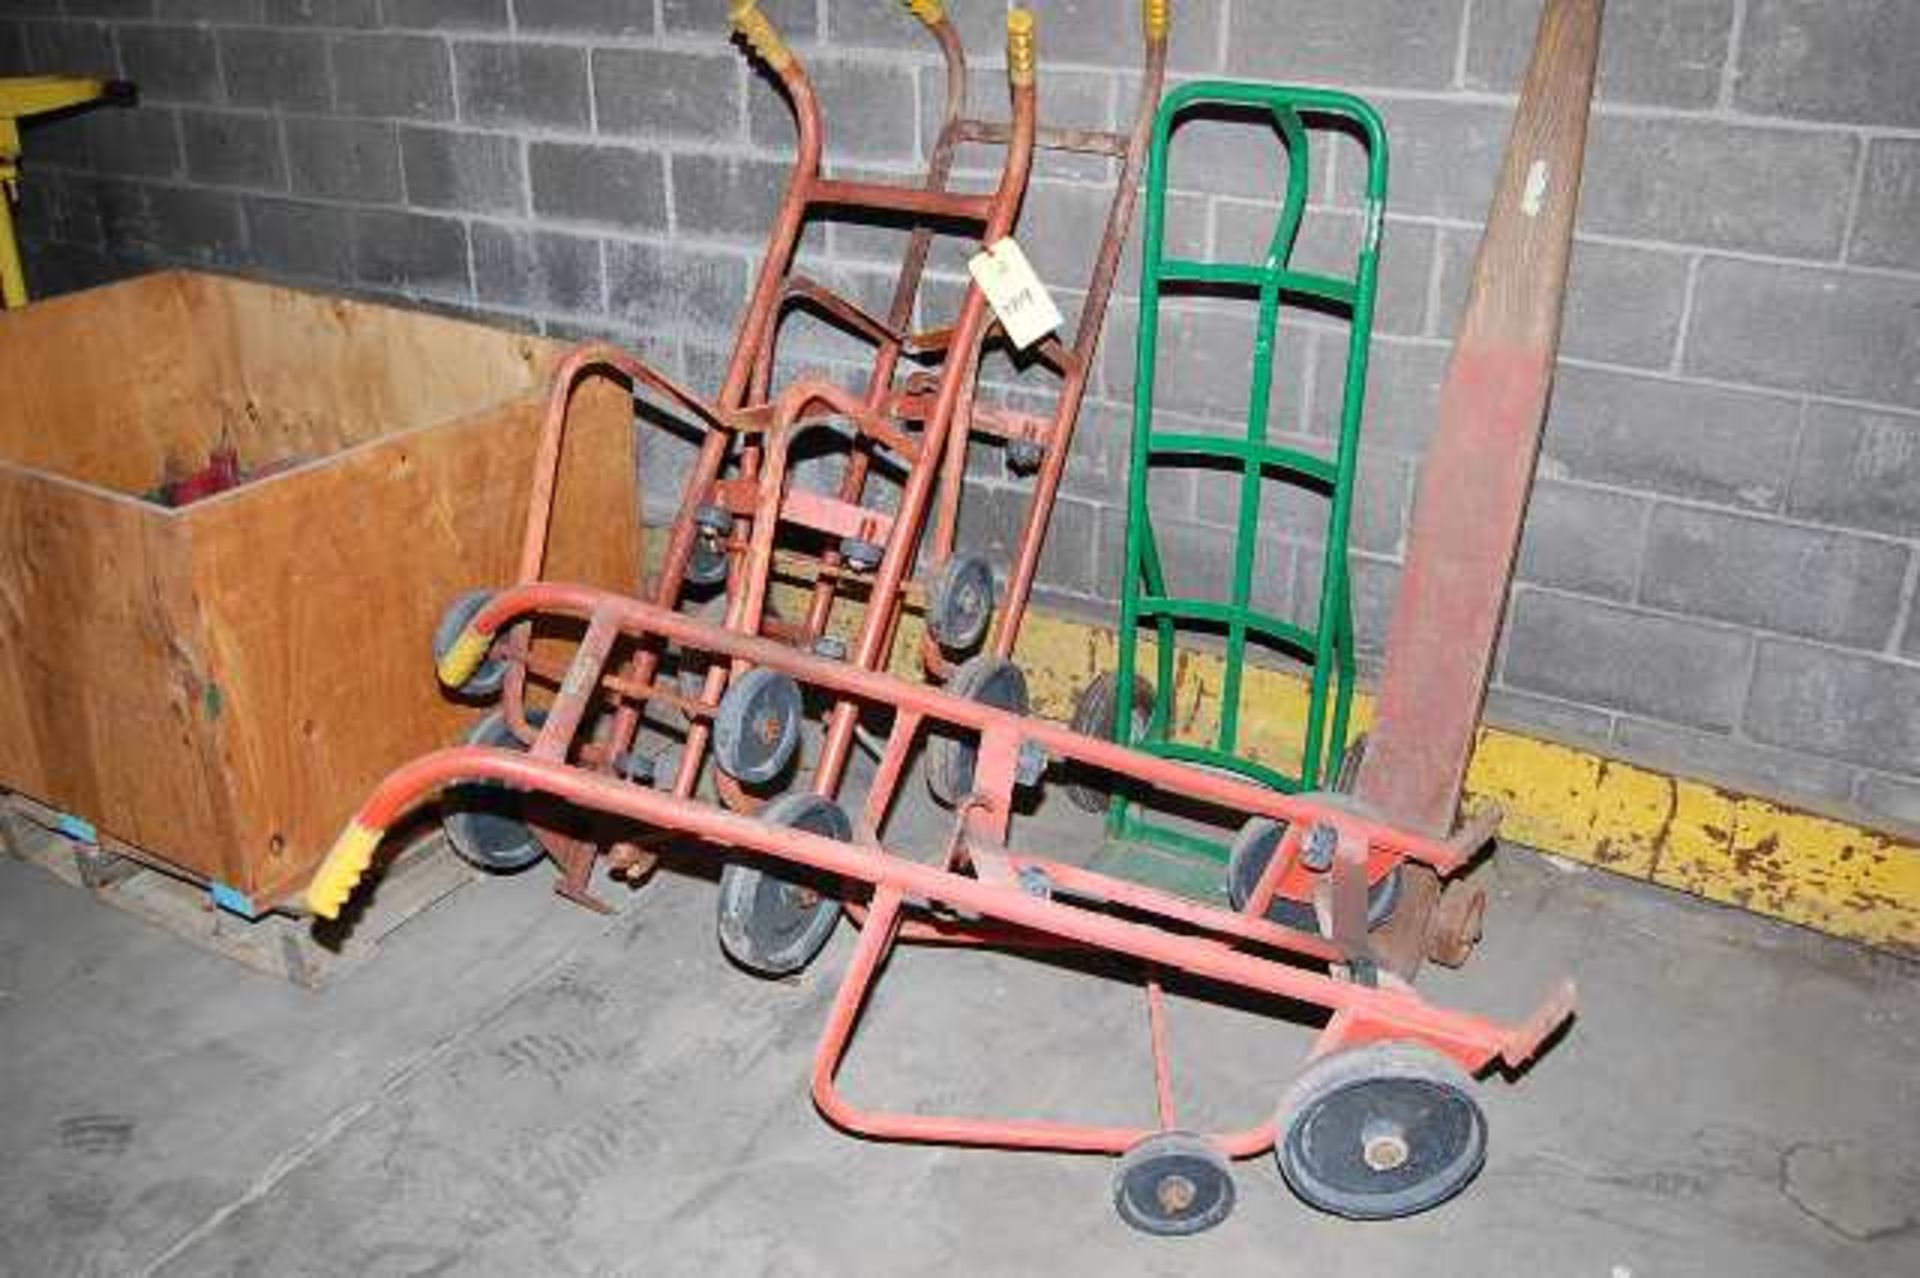 (3) Barrel Carts, (1) 2-Wheel Cart, (1) Machinery Mule